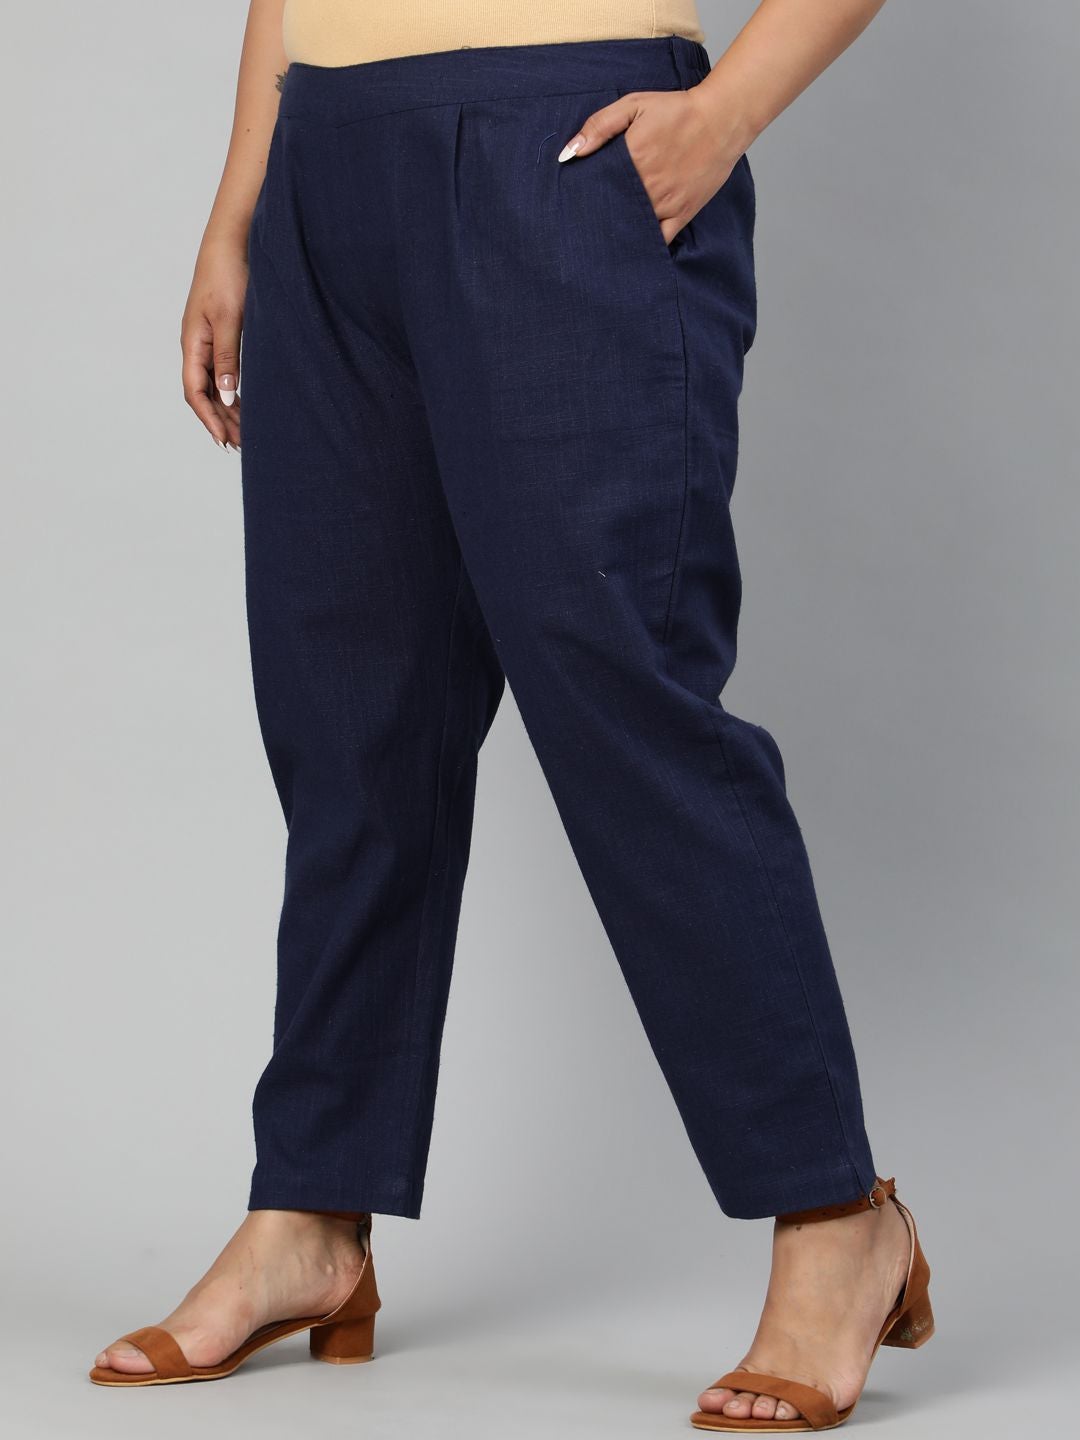 Navy Blue Ethnic Wear Cotton Slub Pants